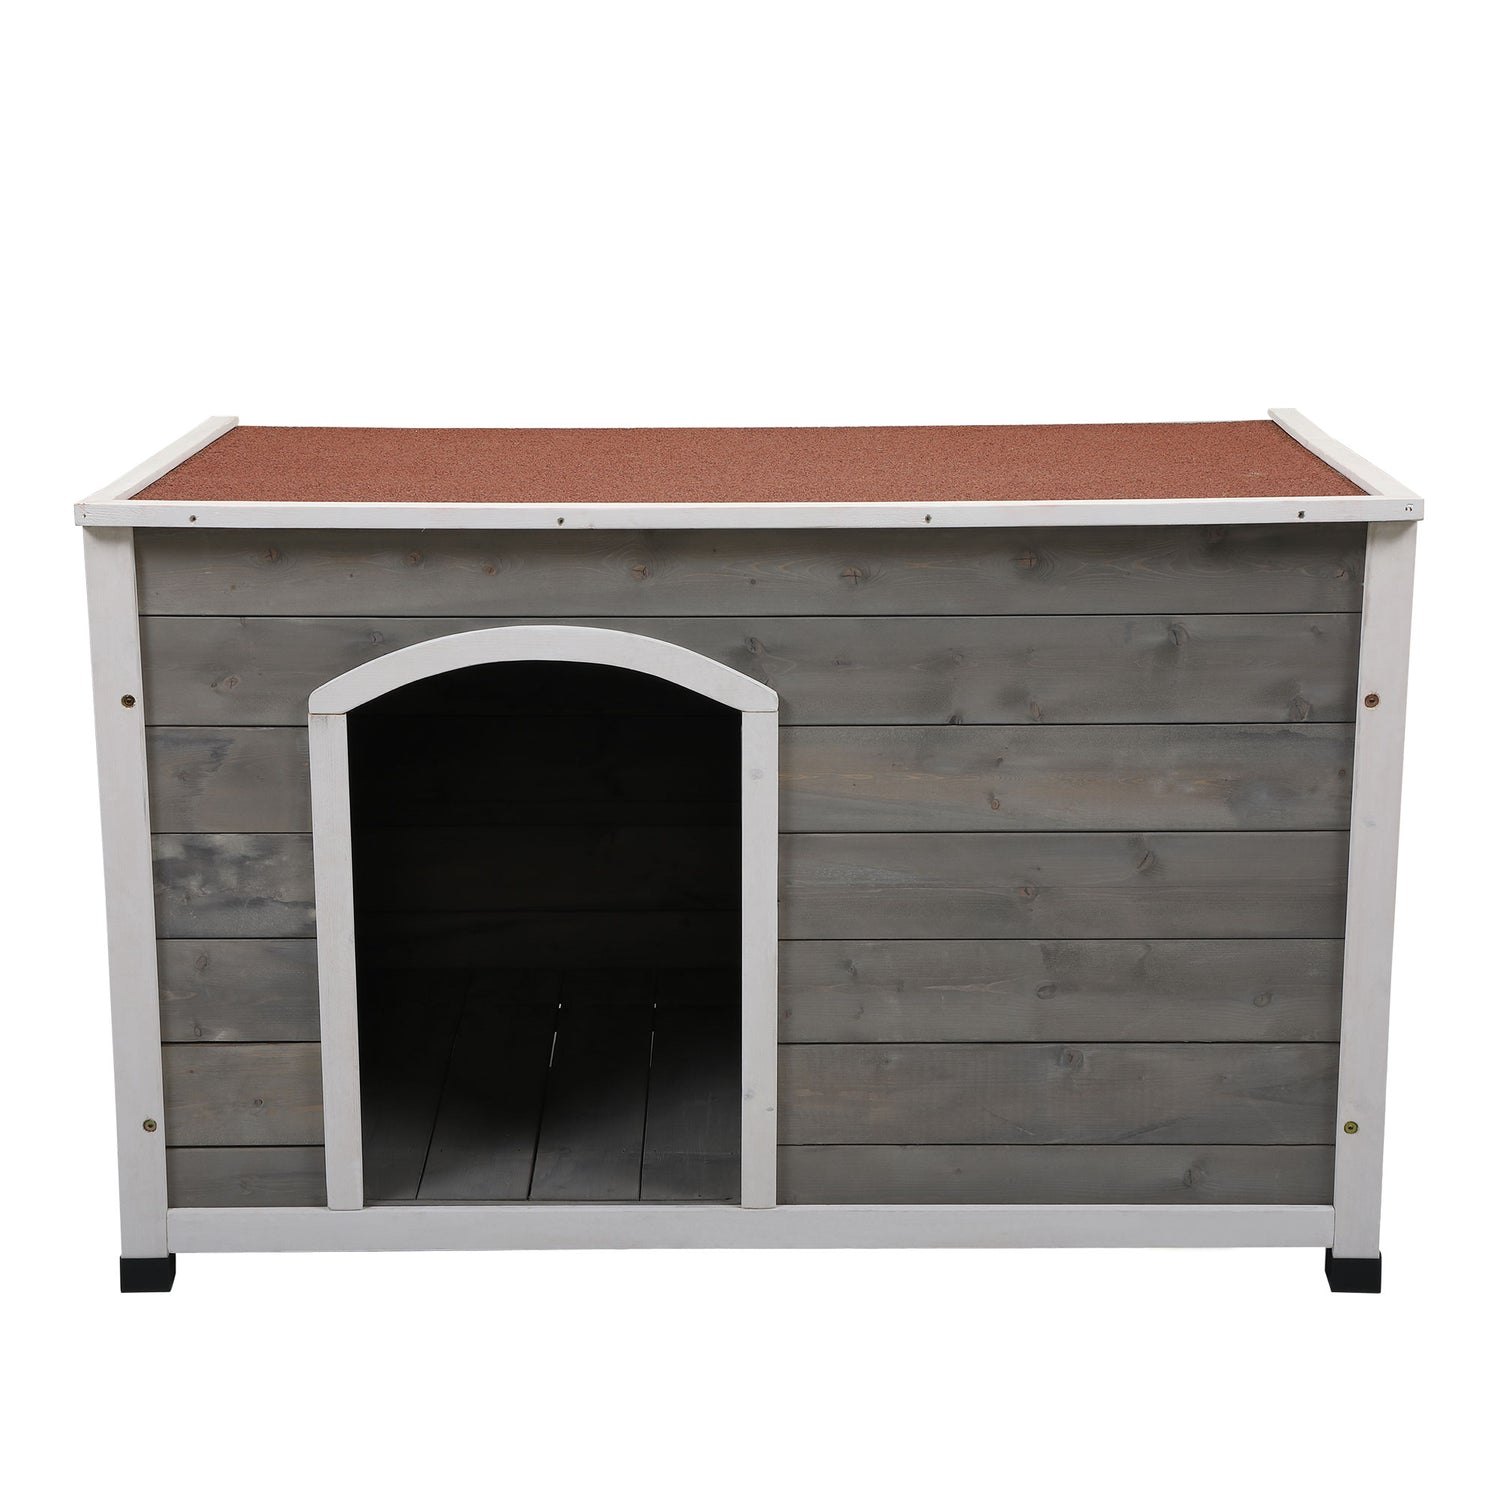 Docooler Outdoor Wood Dog House, Dog Cabin with Weatherproof Roof and Open Door, Easy To